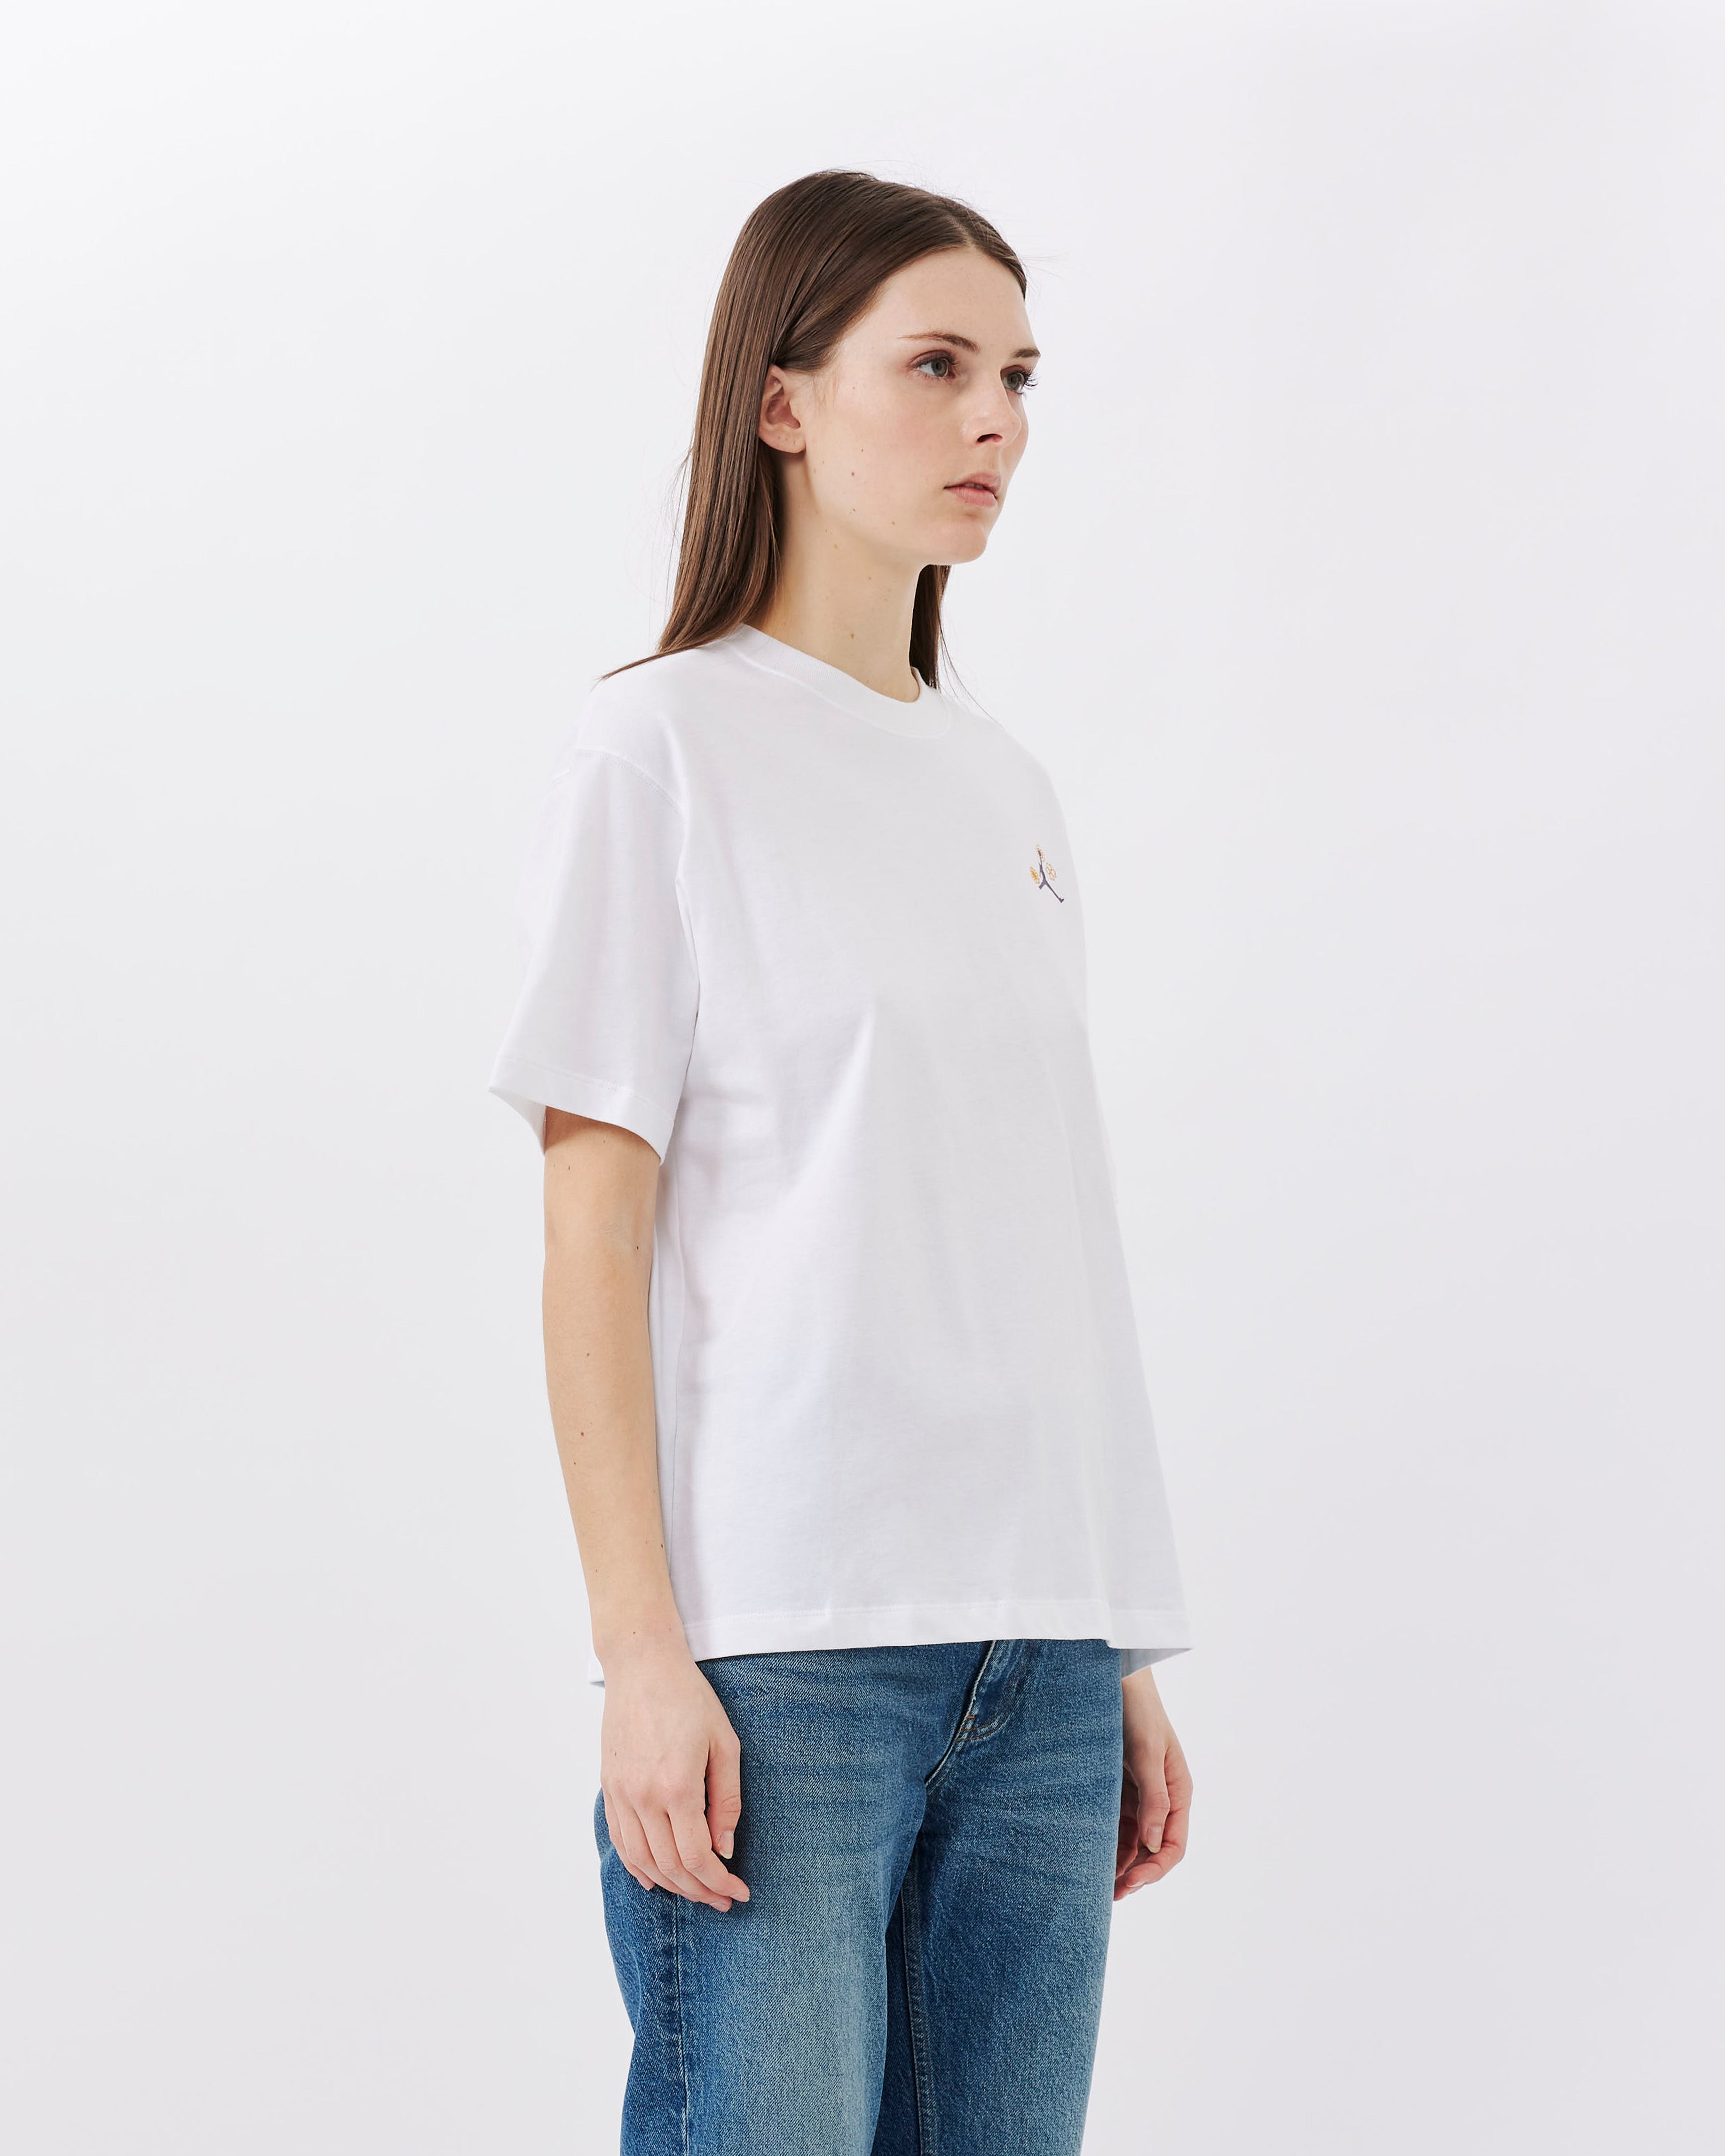 Jordan Brand Women's Graphic T-Shirt 'International Women's Day' WHITE FJ5641-100